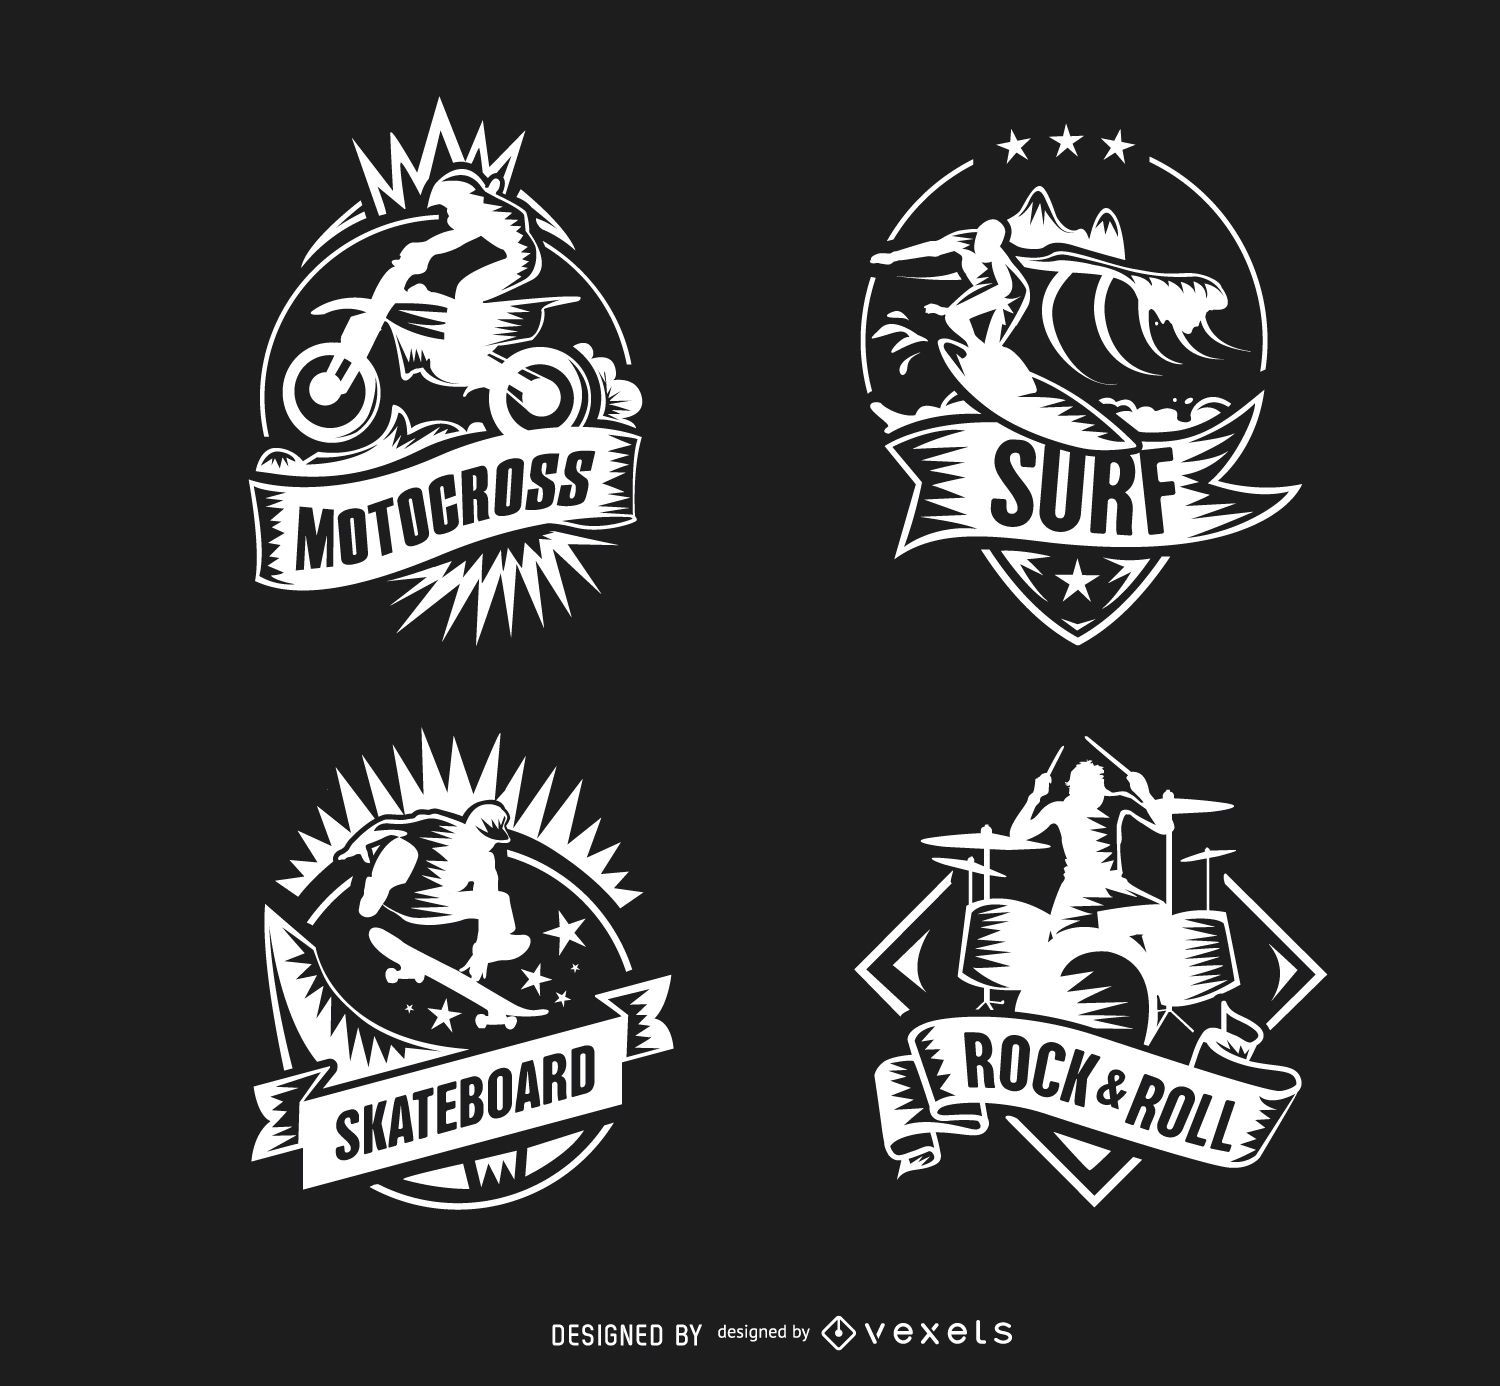 Motocross Surf Skateboard Drummer Logos